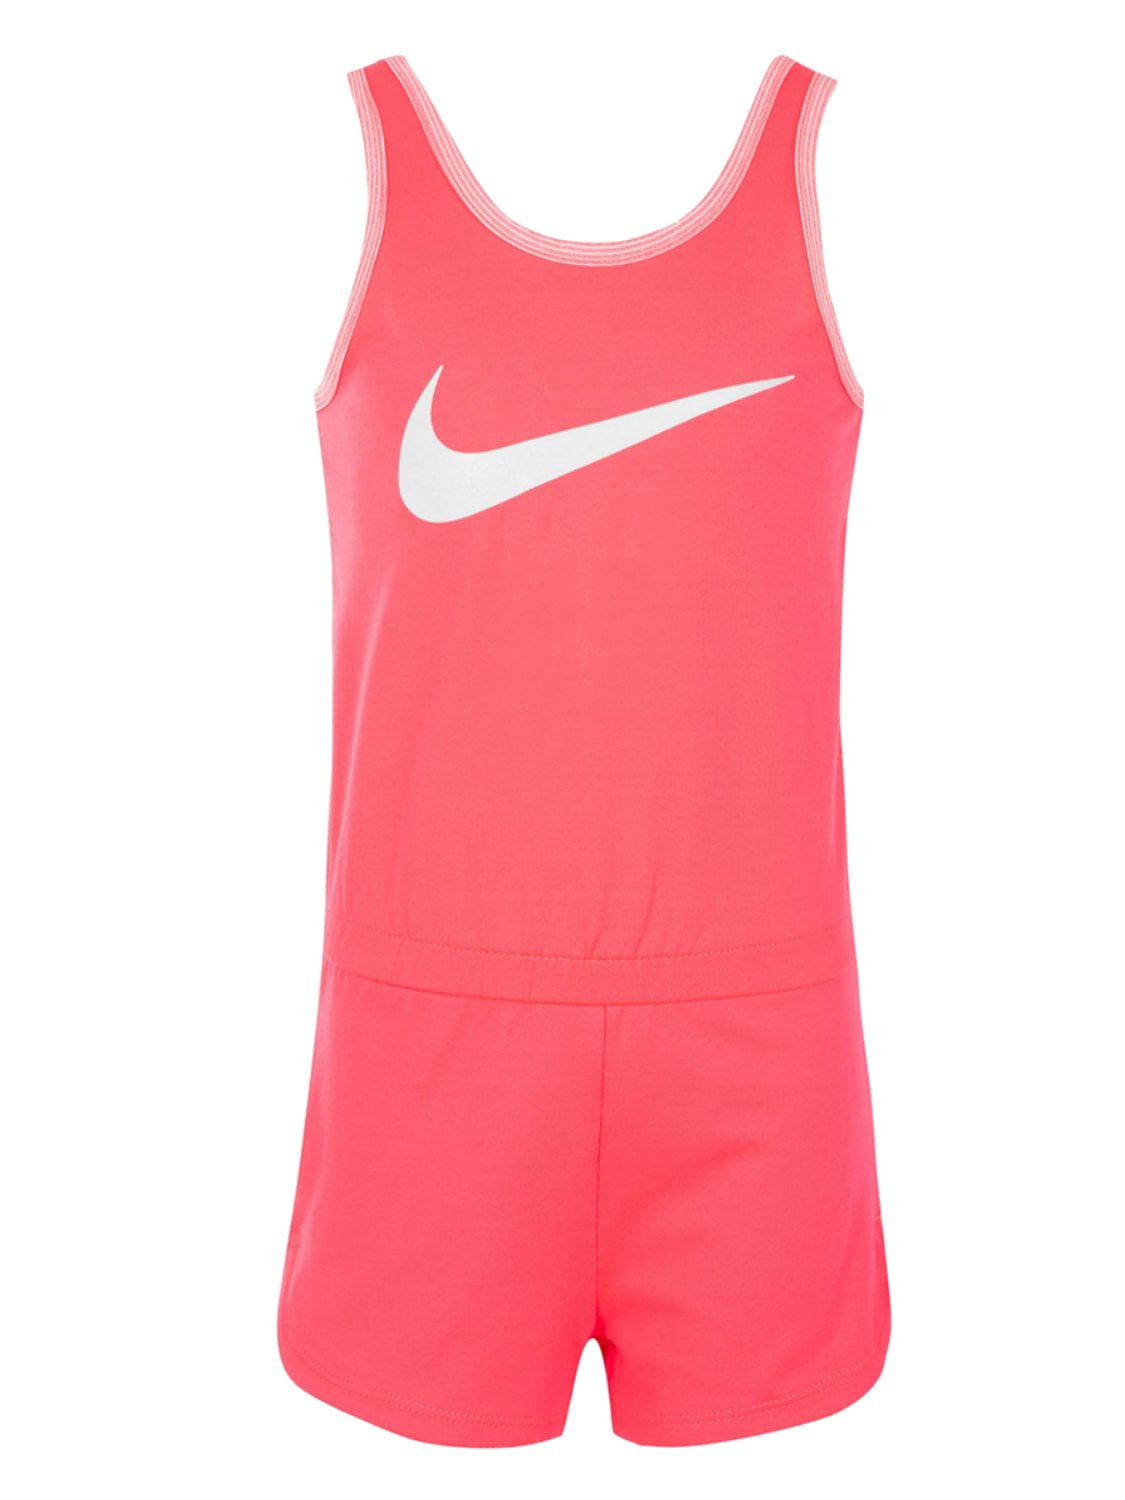 Nike Dry Coral Racer Pink Romper Dri-fit Jumper Jumpsuit Shorts 4 